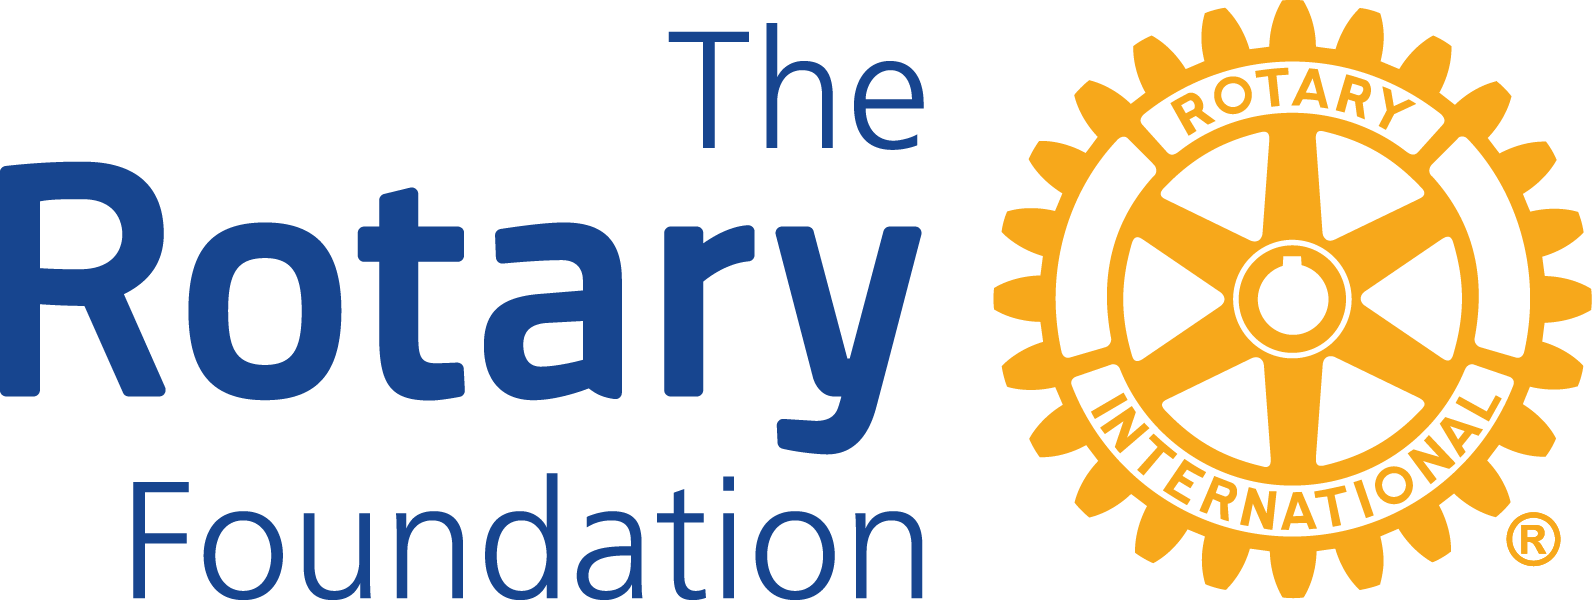 Toledo Rotary Foundation / RI Global Grant Provides Heart-Healing